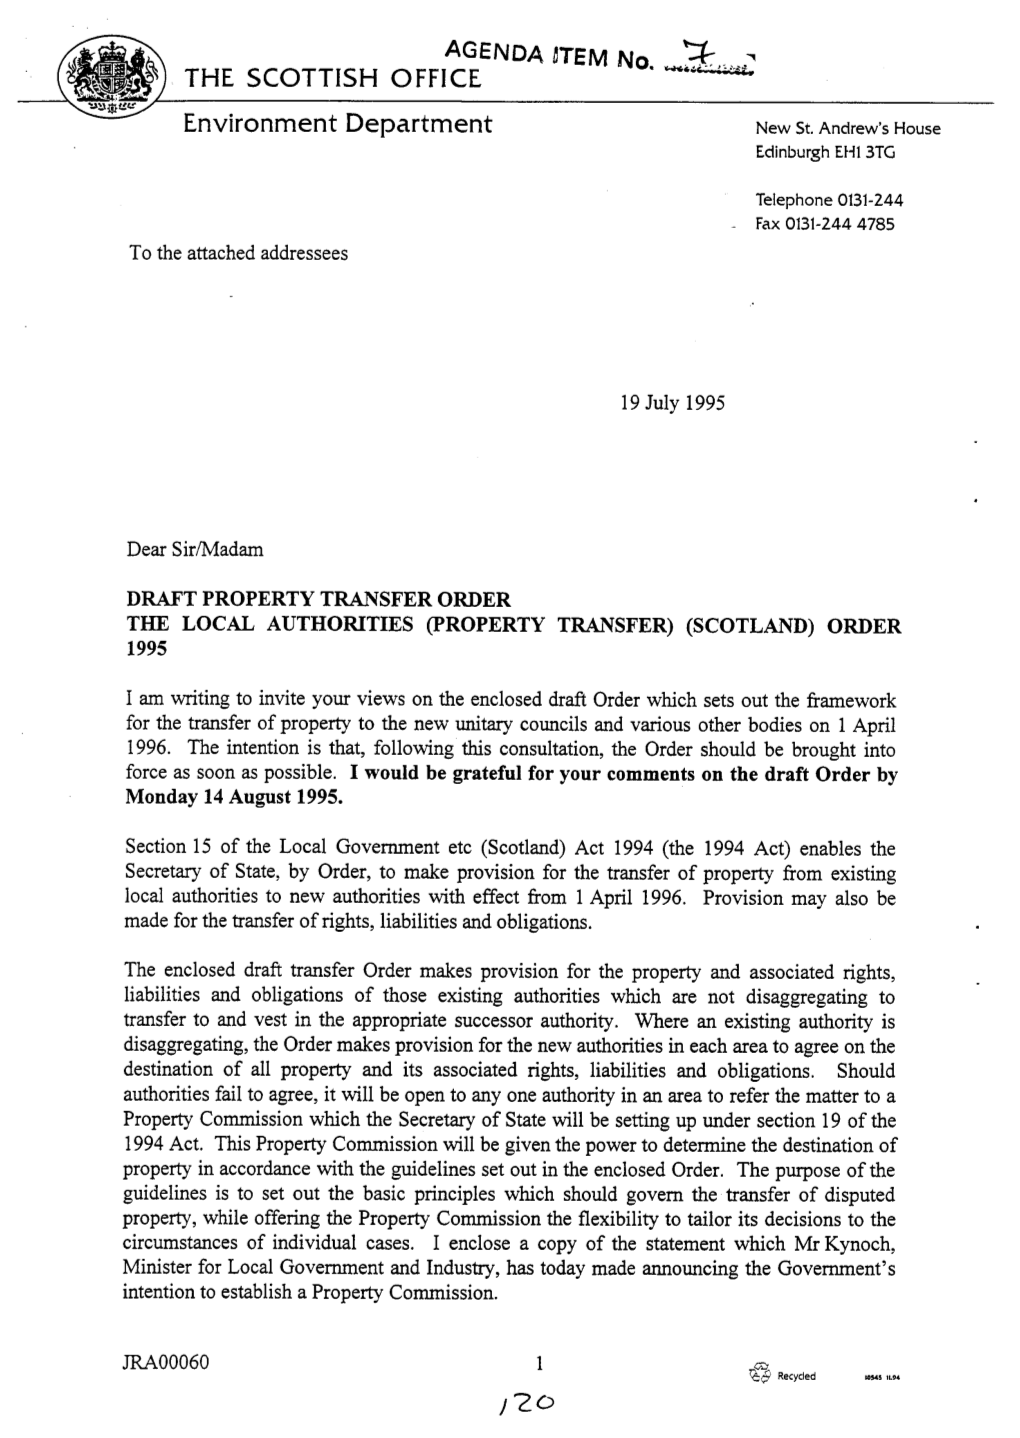 (Property Transfer) (Scotland) Order 1995